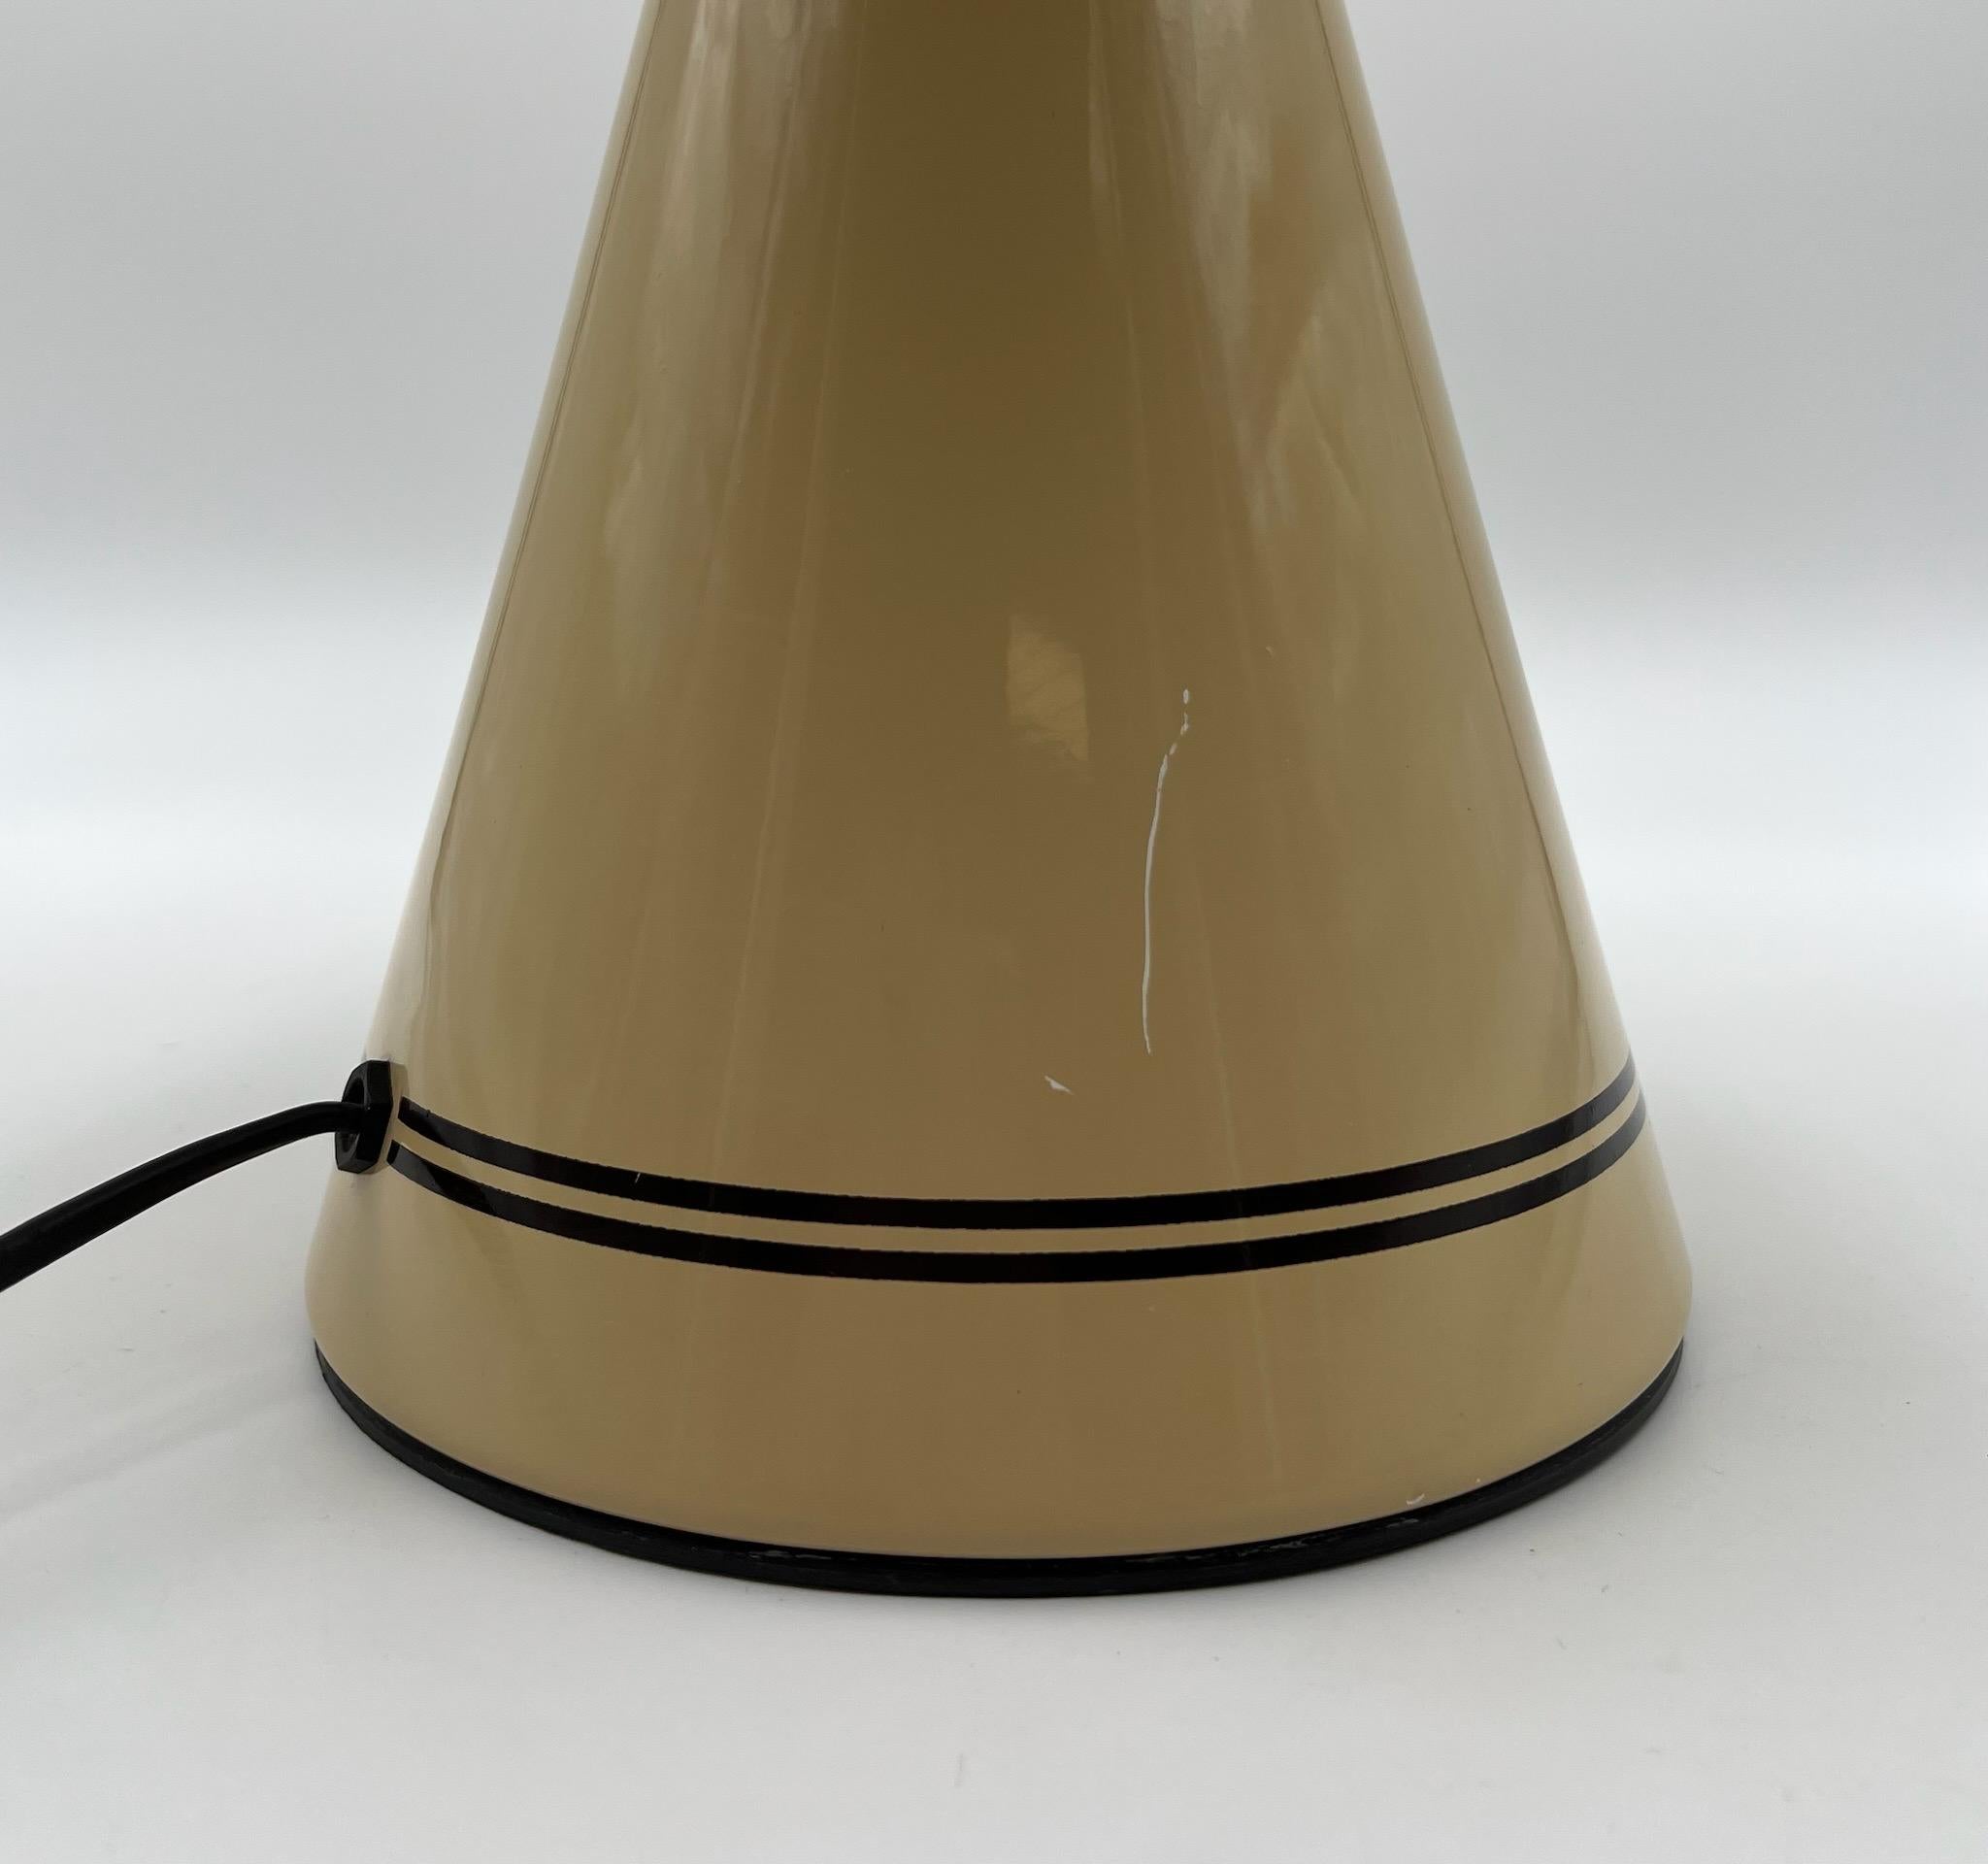 Metal Iconic Mushroom 70s Lamp ‘Baobab’ by iGuzzini - Italian Space Age Iconic Lamp For Sale